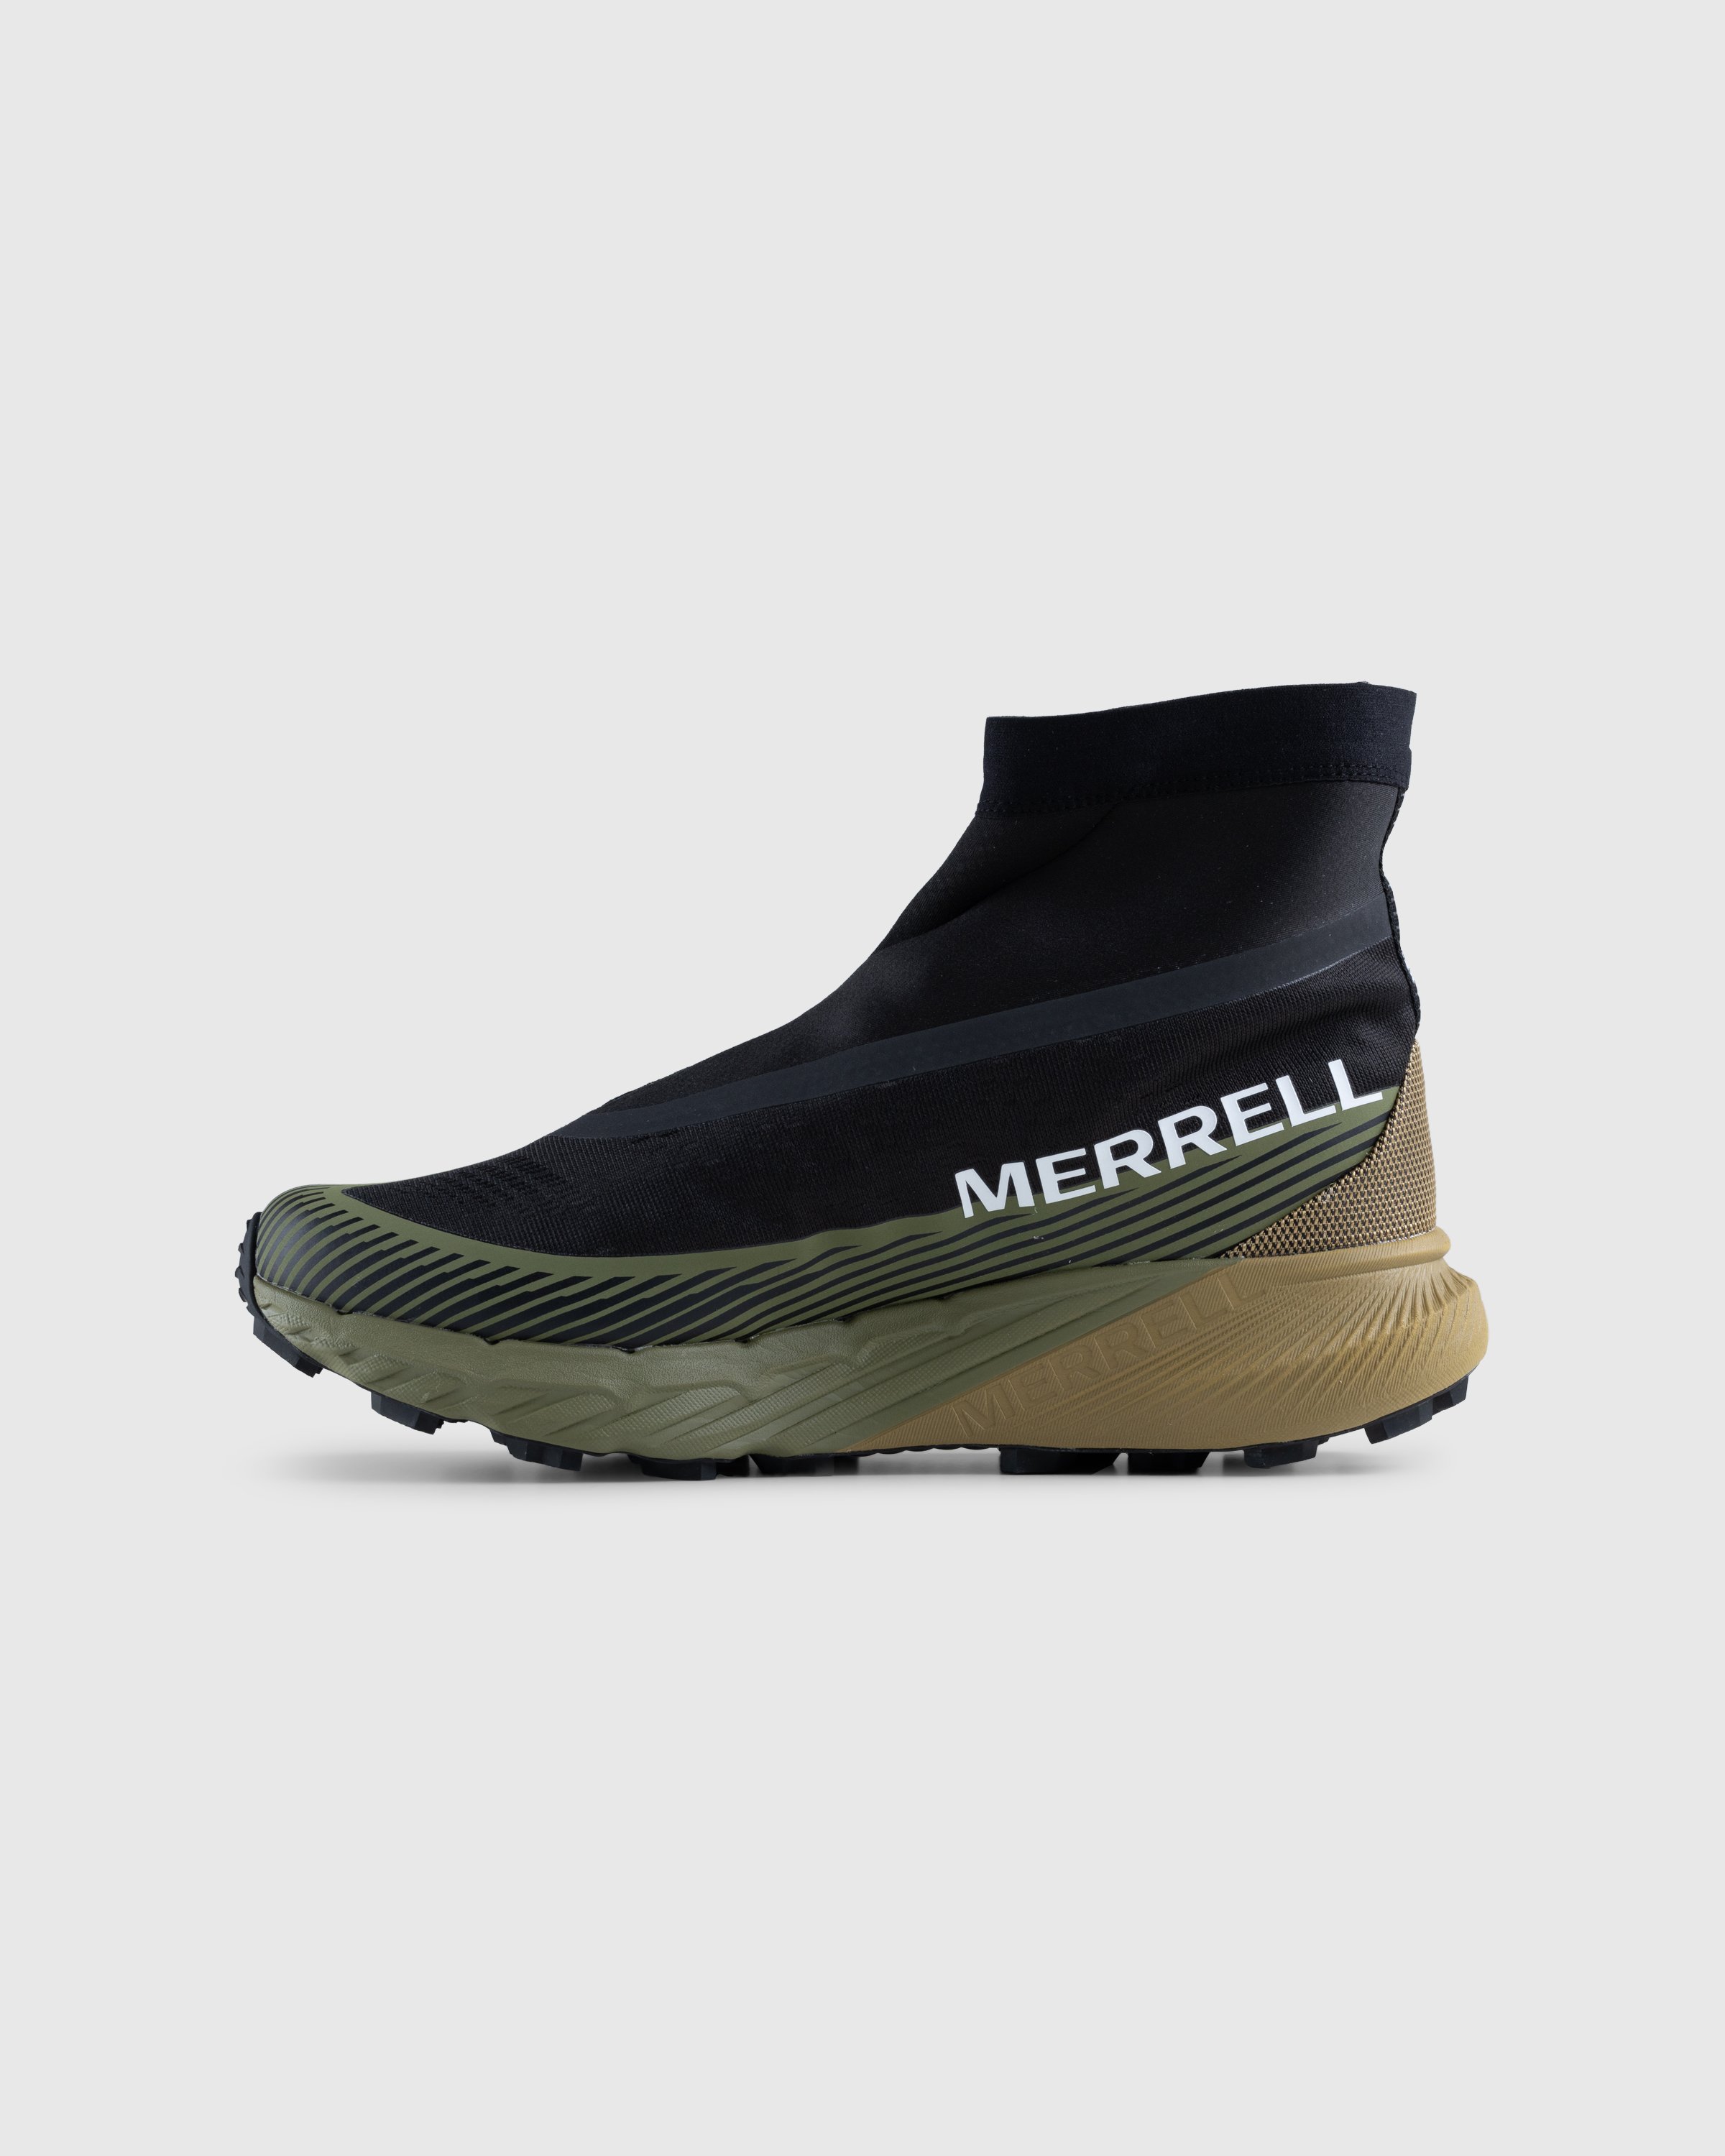 Merrell - Agility Peak 5 Zero GORE-TEX Black/Avocado - Footwear - Multi - Image 2